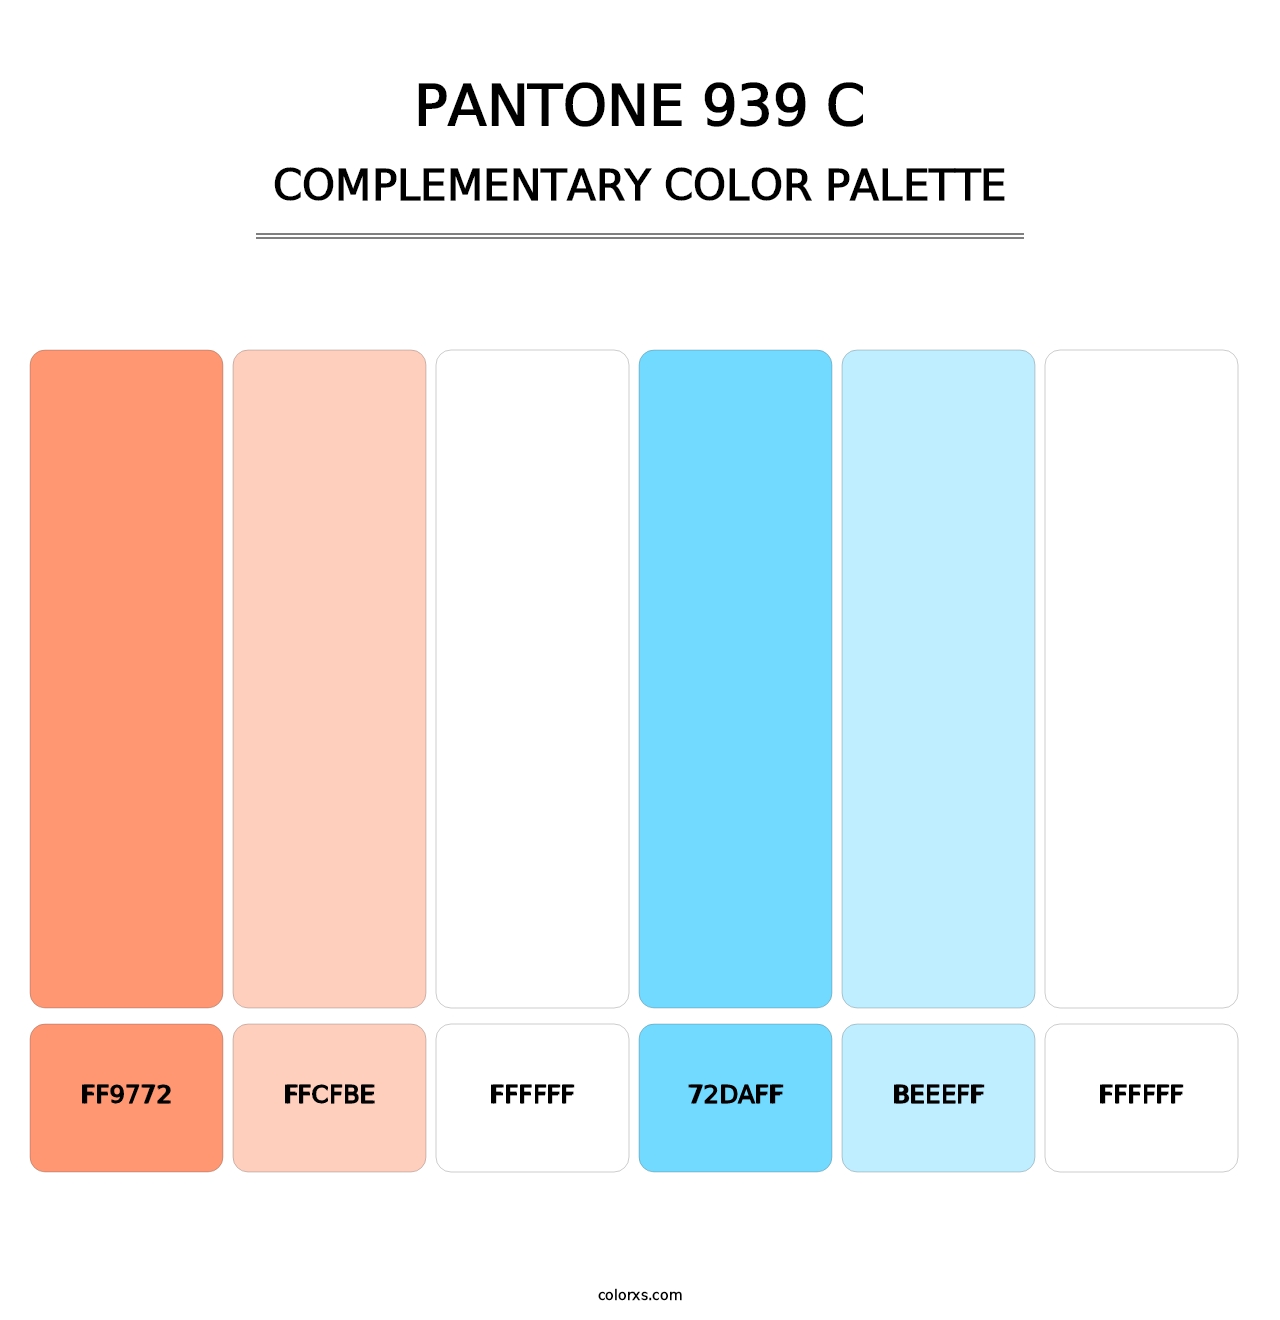 PANTONE 939 C - Complementary Color Palette